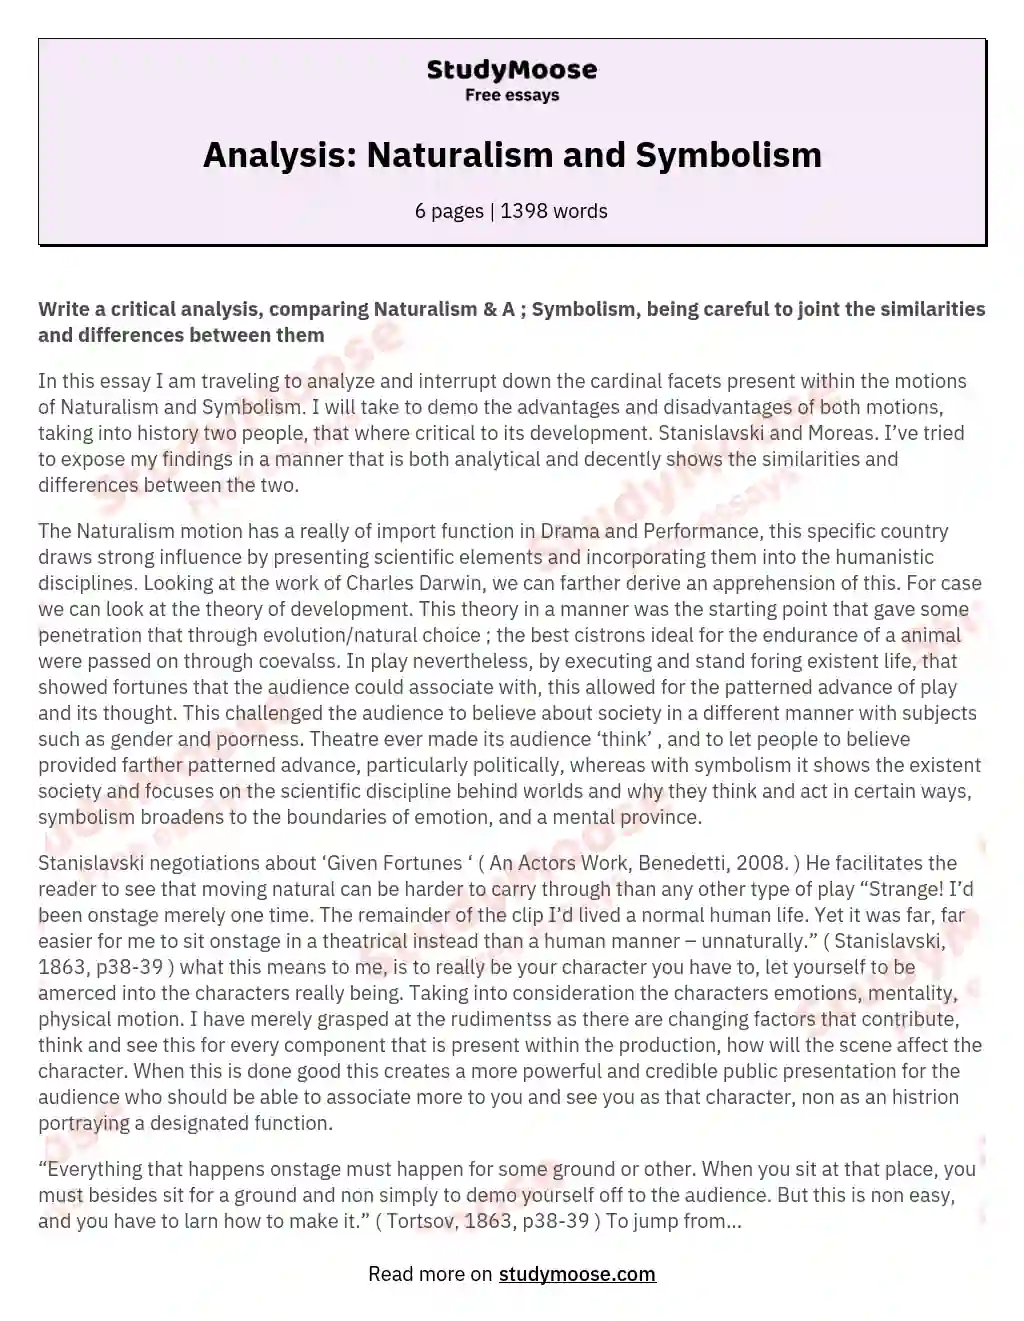 Analysis: Naturalism and Symbolism essay